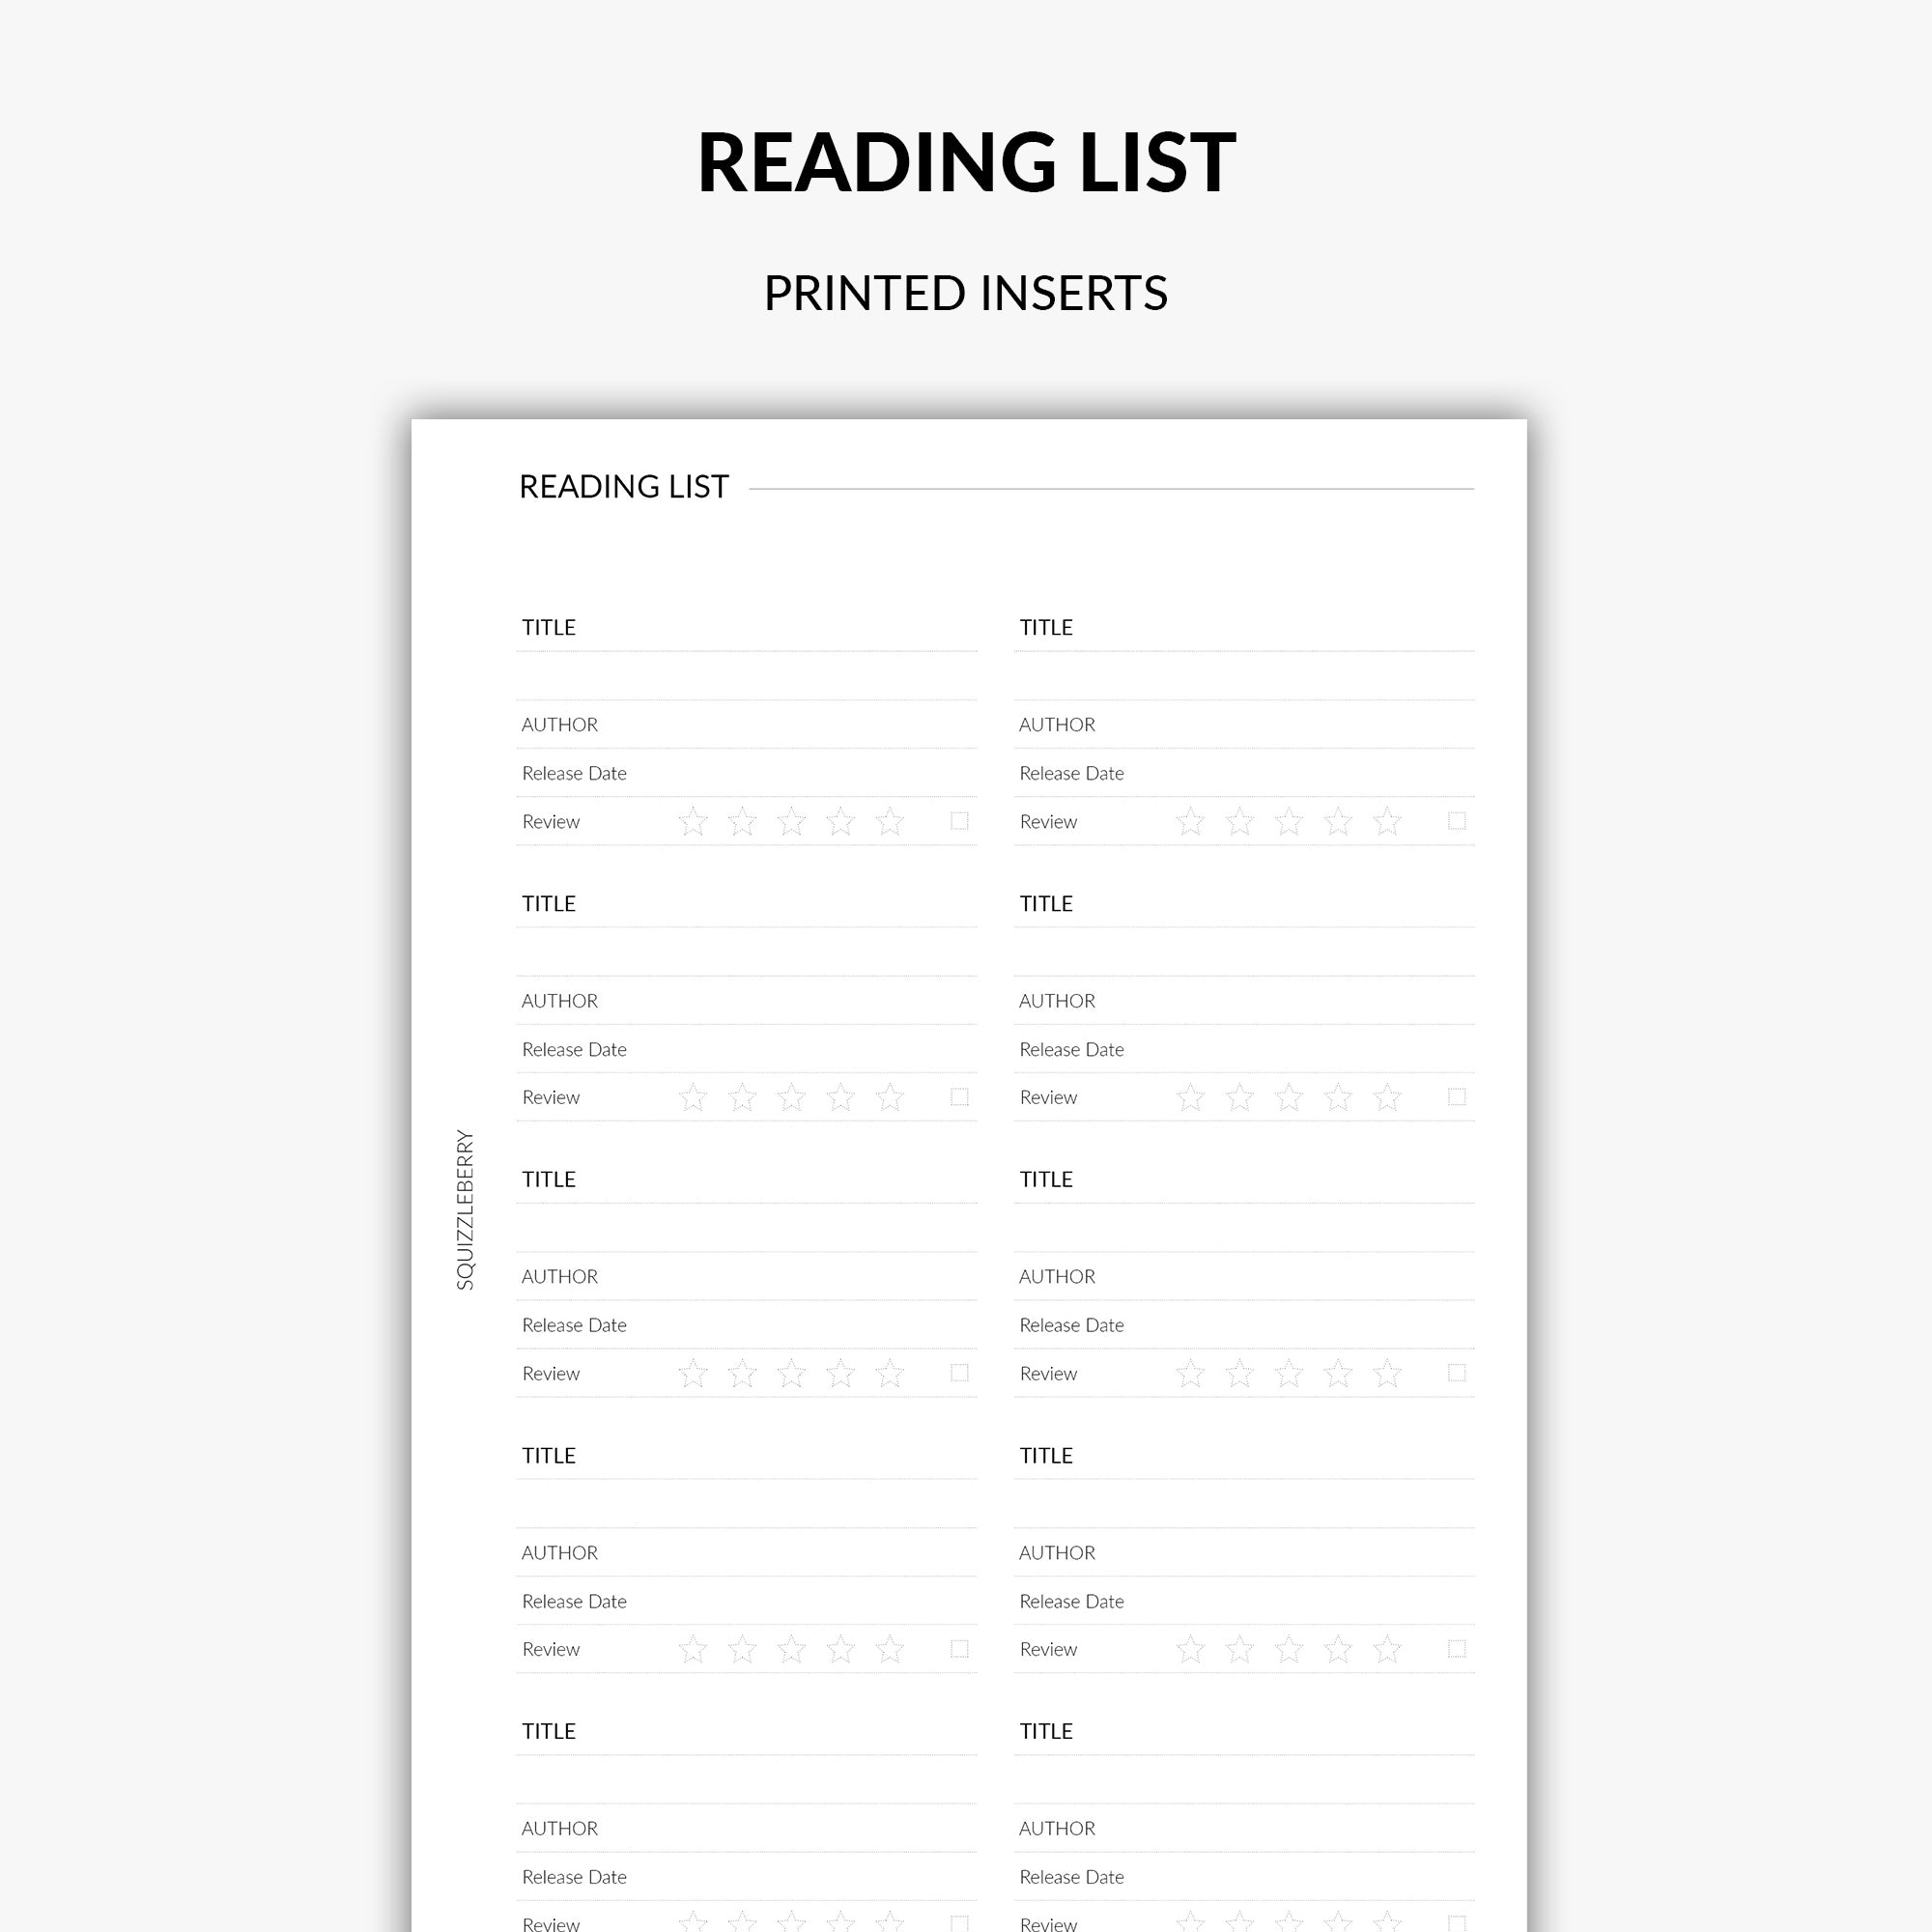 Reading List